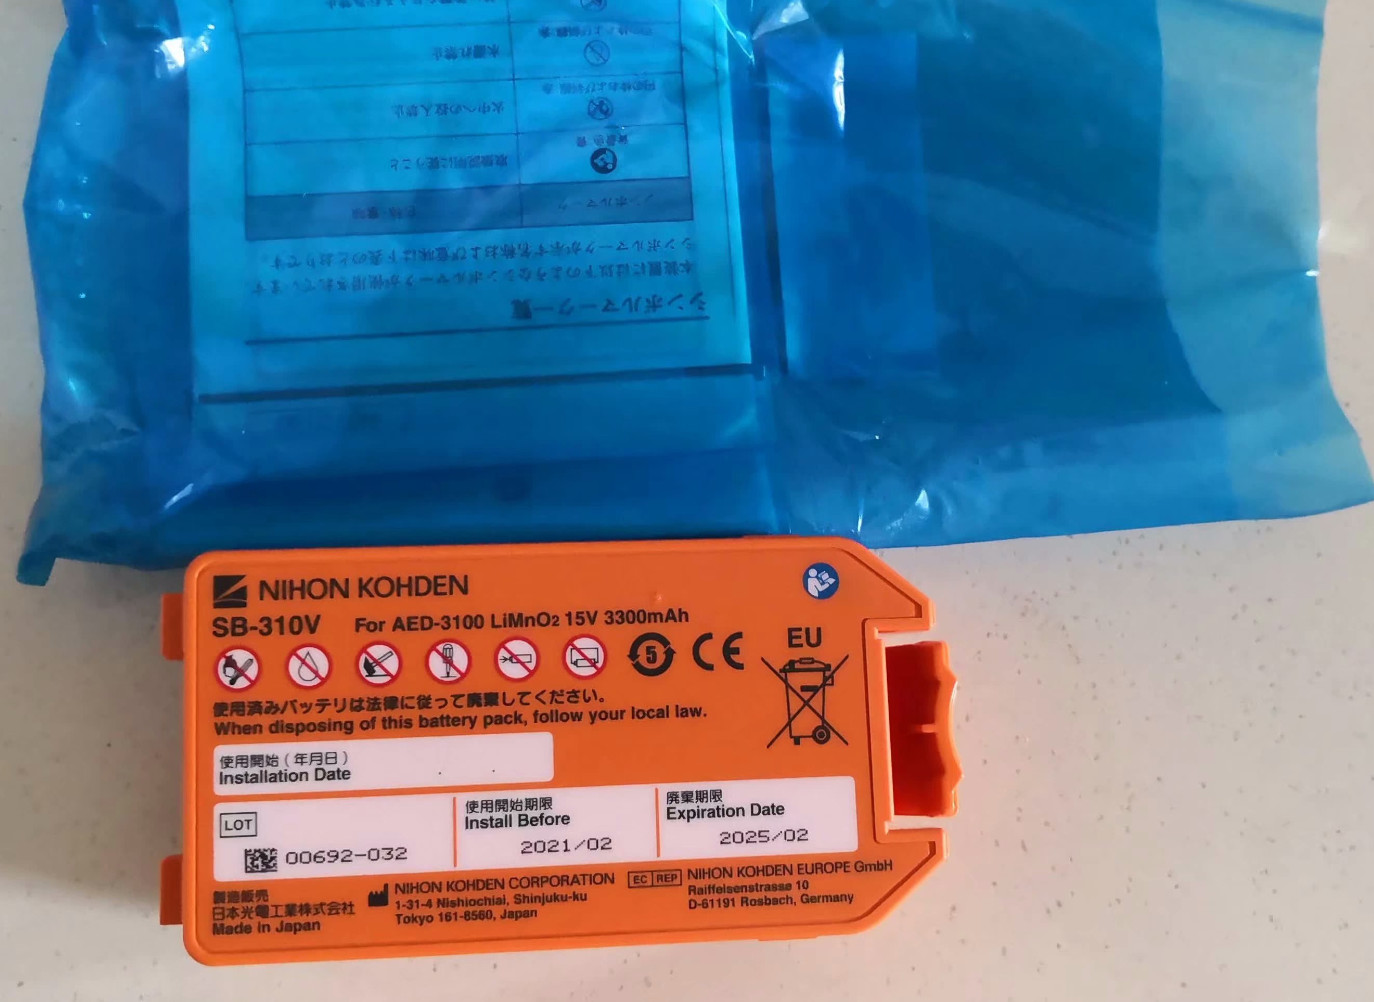 Nihon Kohden Medical Battery for AED-3100 LiMnO2 15 V 3300MAH